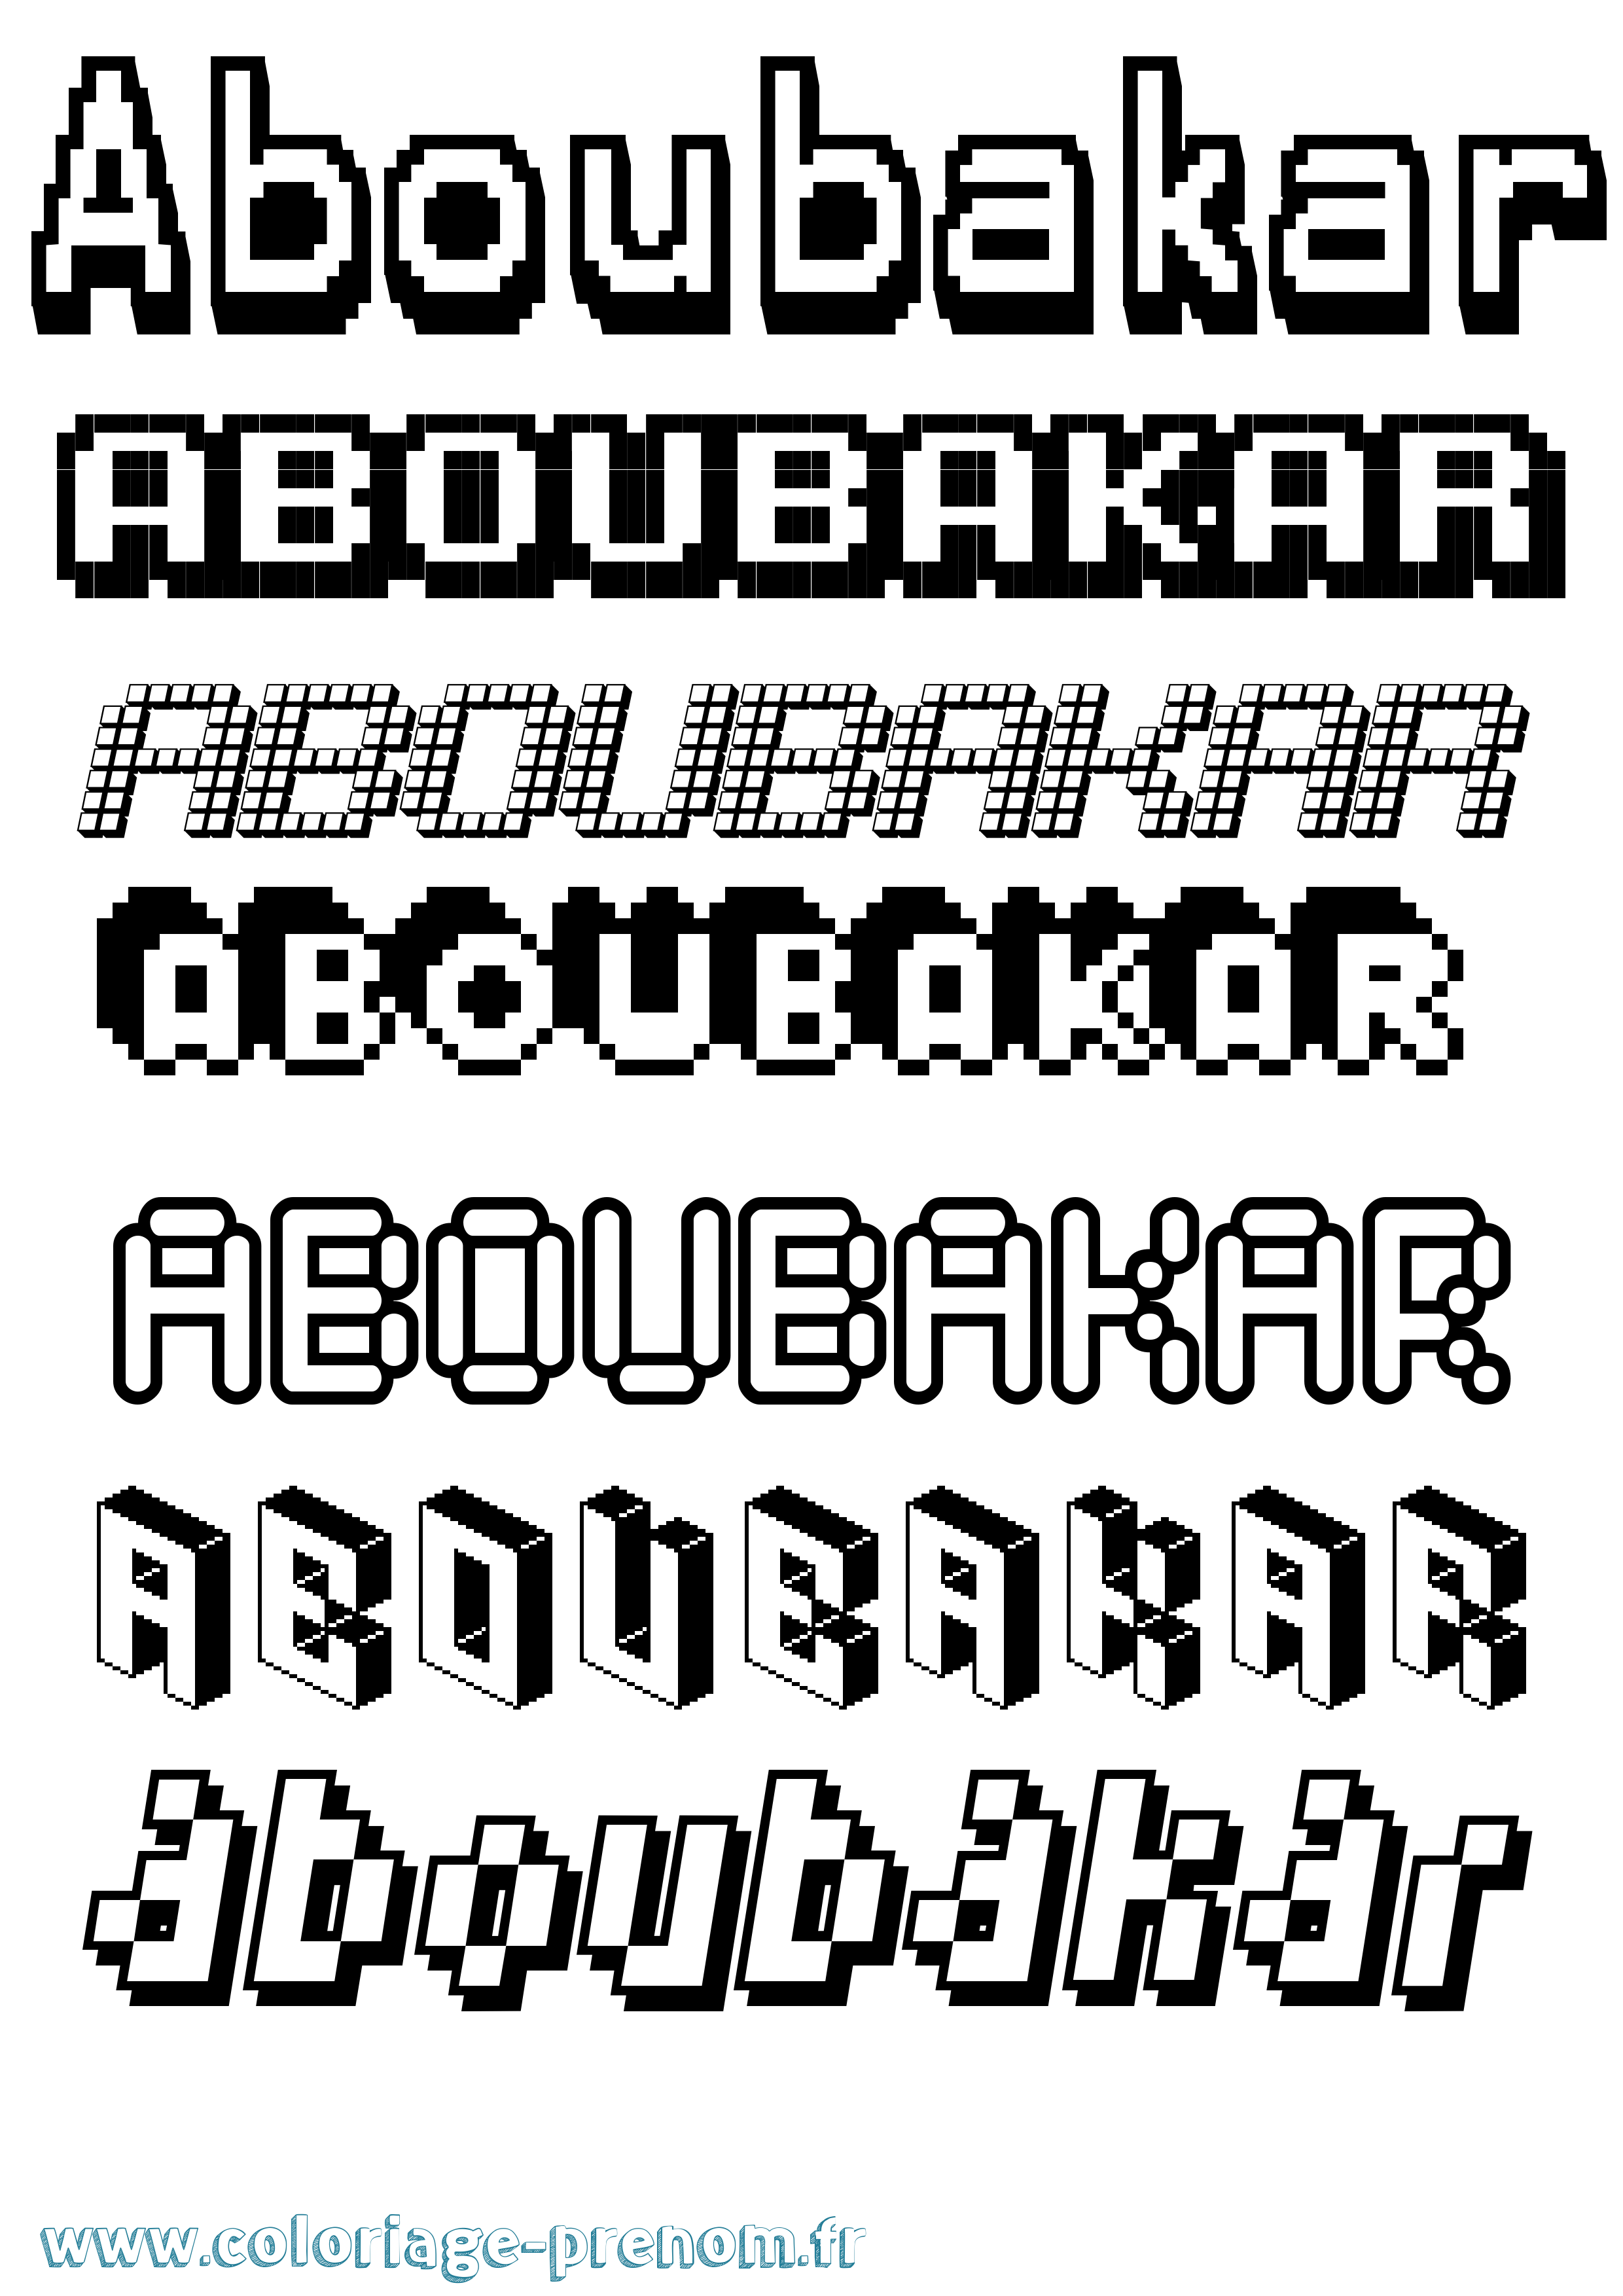 Coloriage prénom Aboubakar